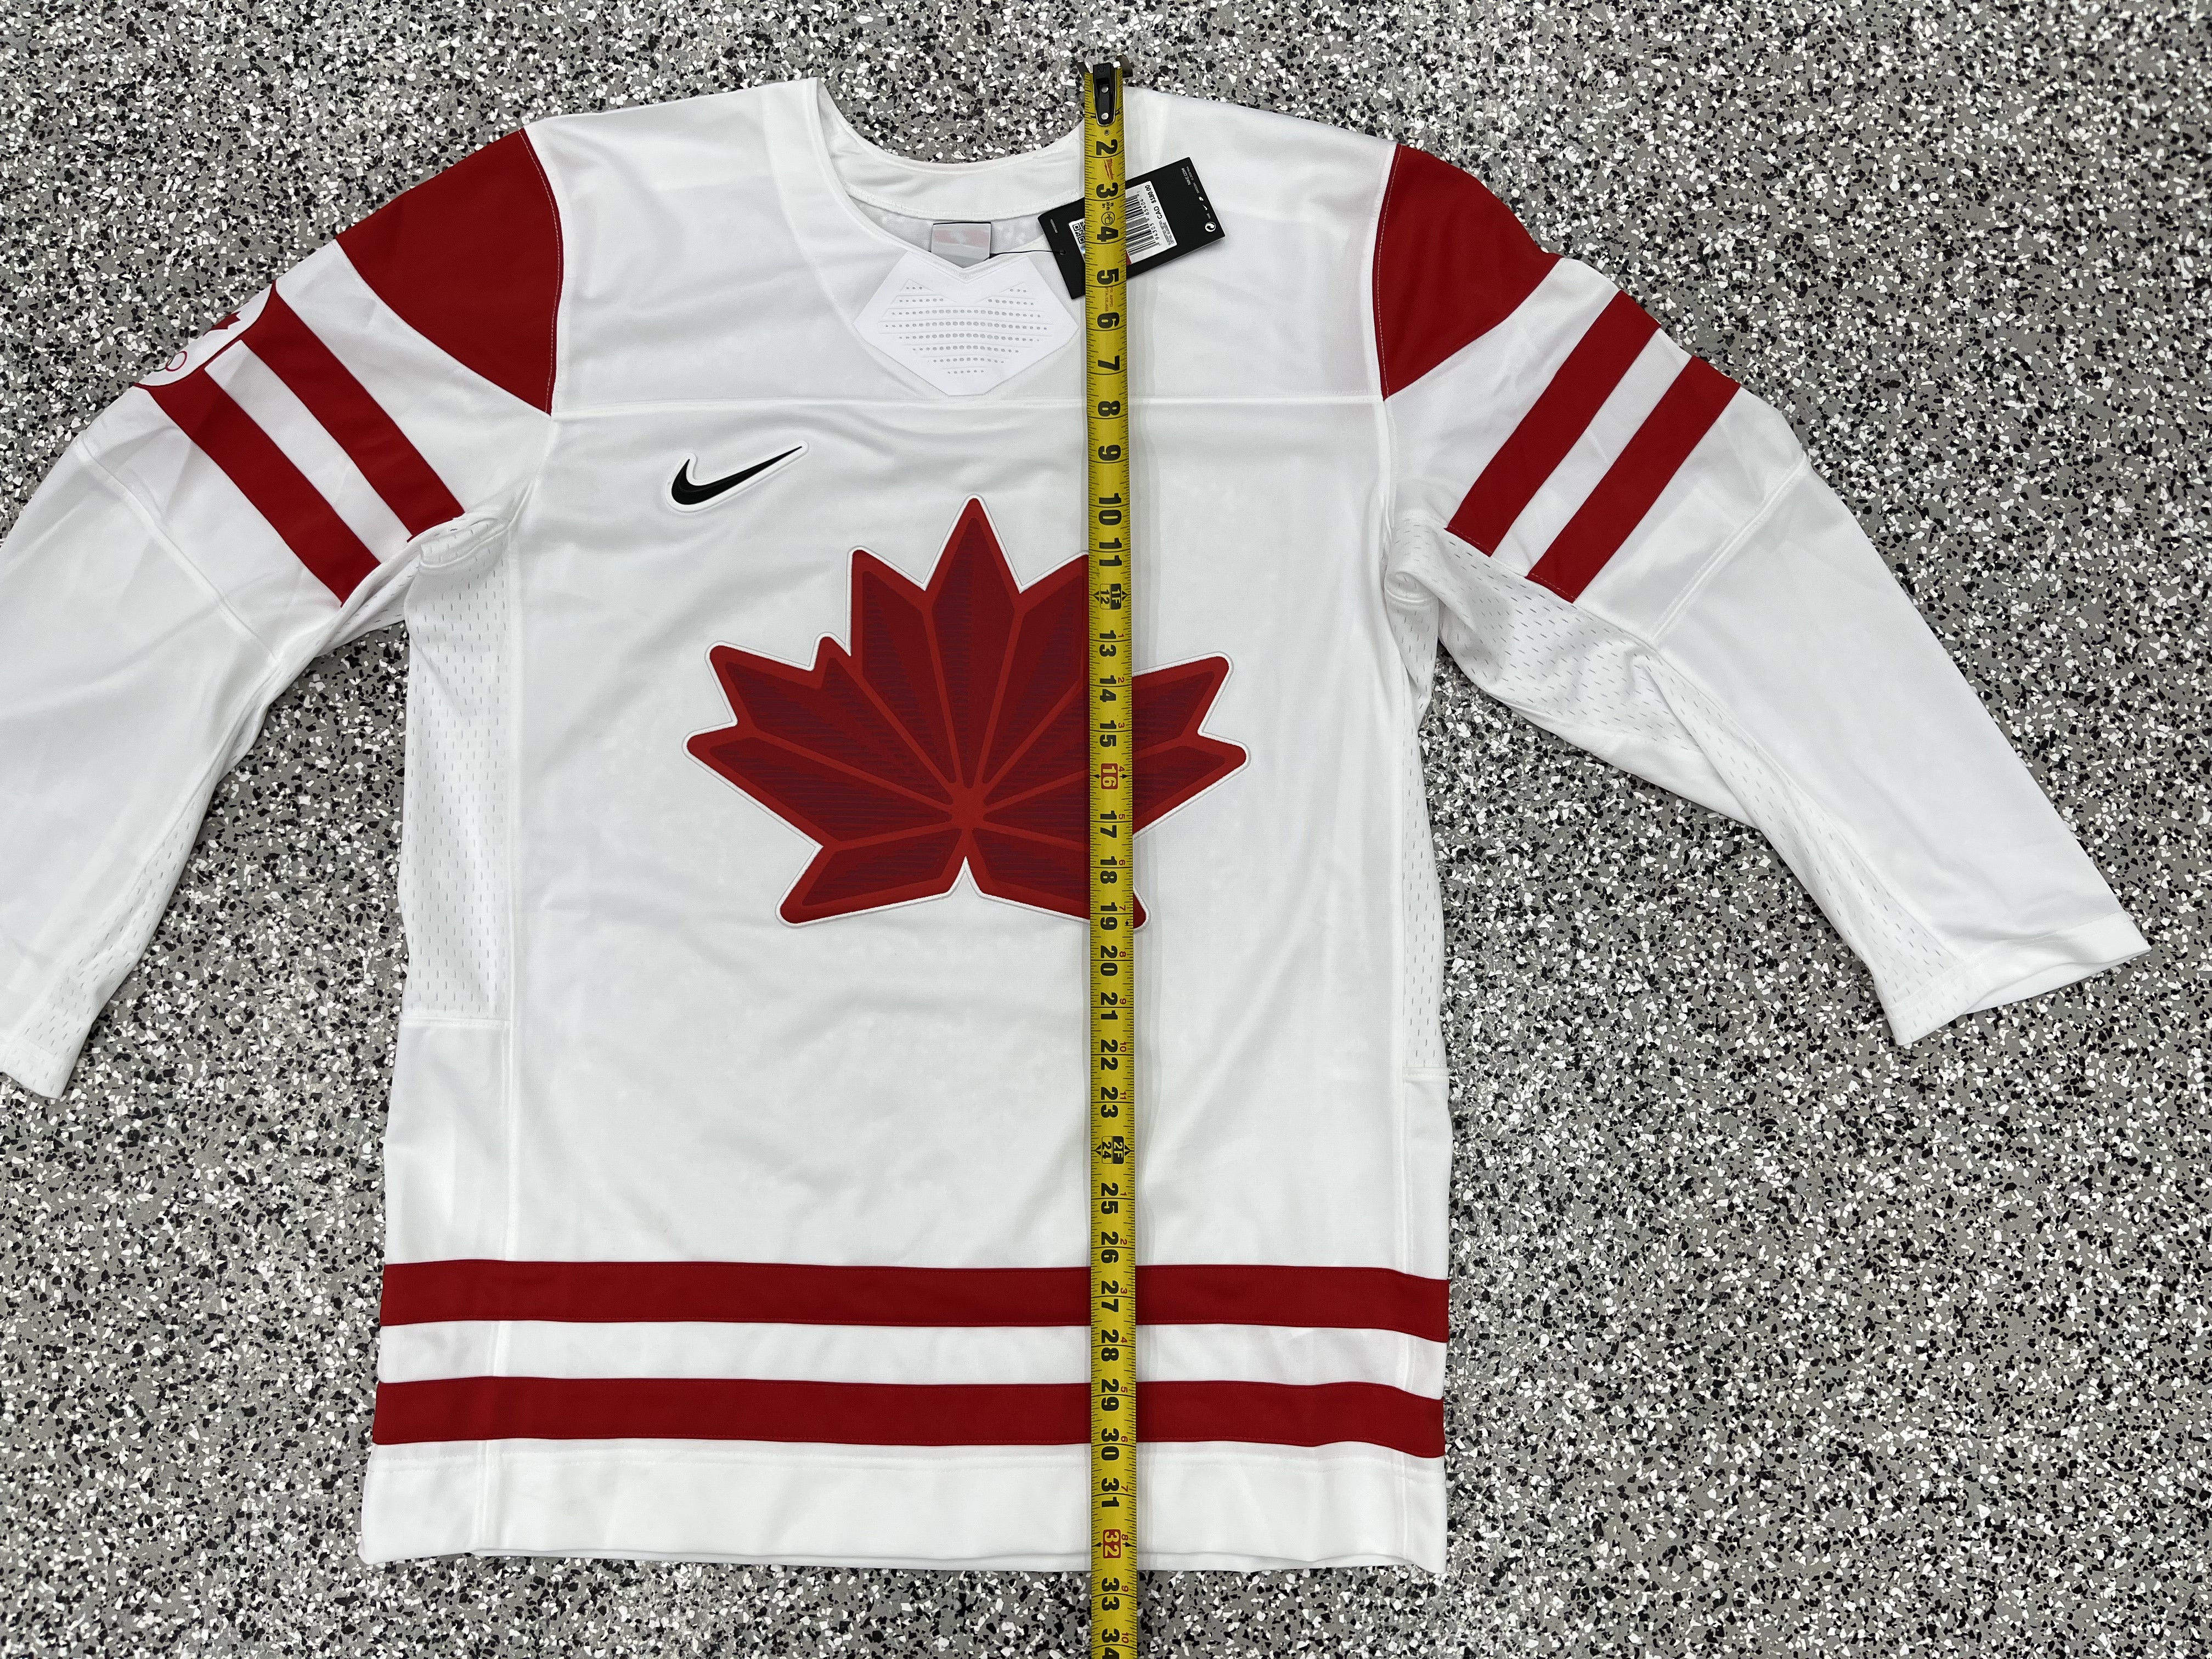 Men's Nike White Hockey Canada - Team Replica Jersey